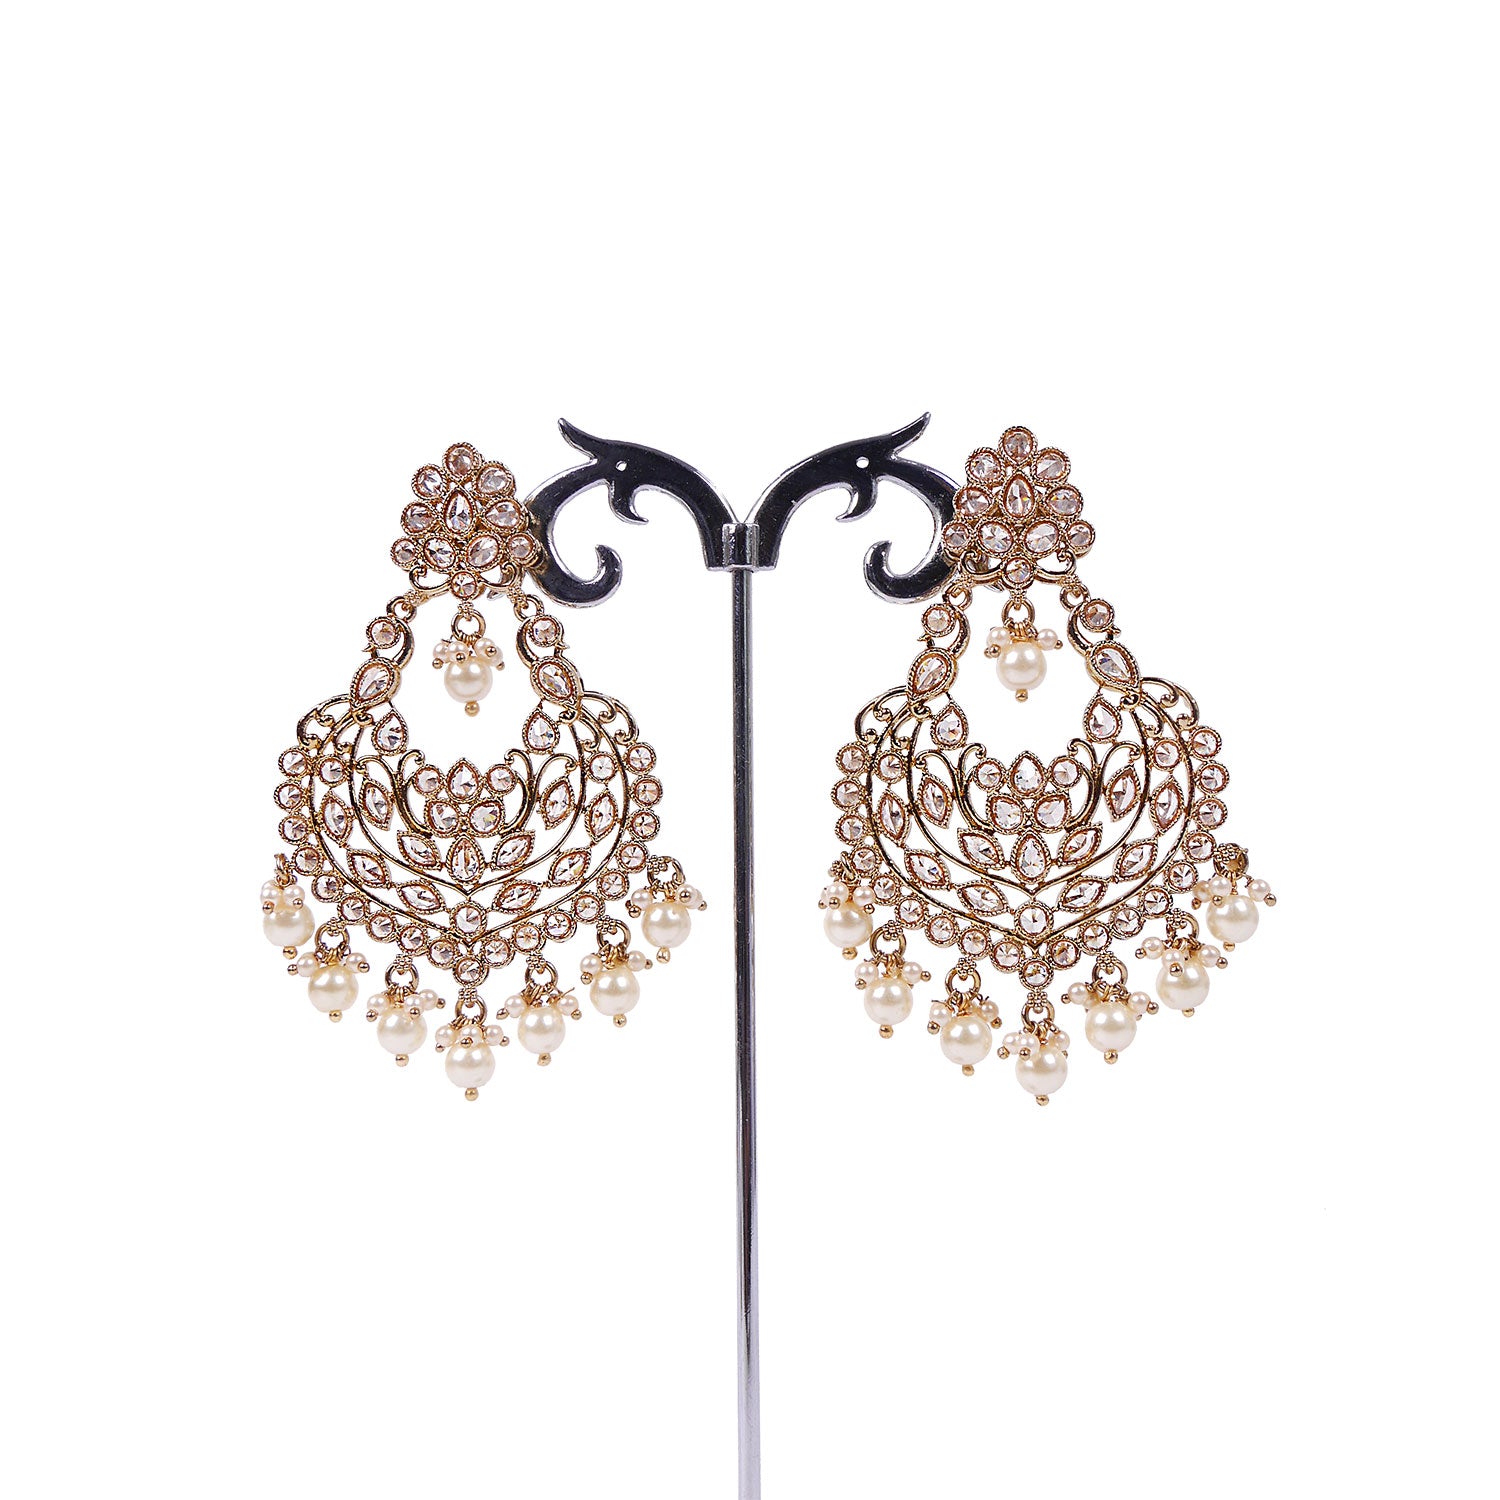 Laavya Chandbali Earrings in Pearl and Antique Gold